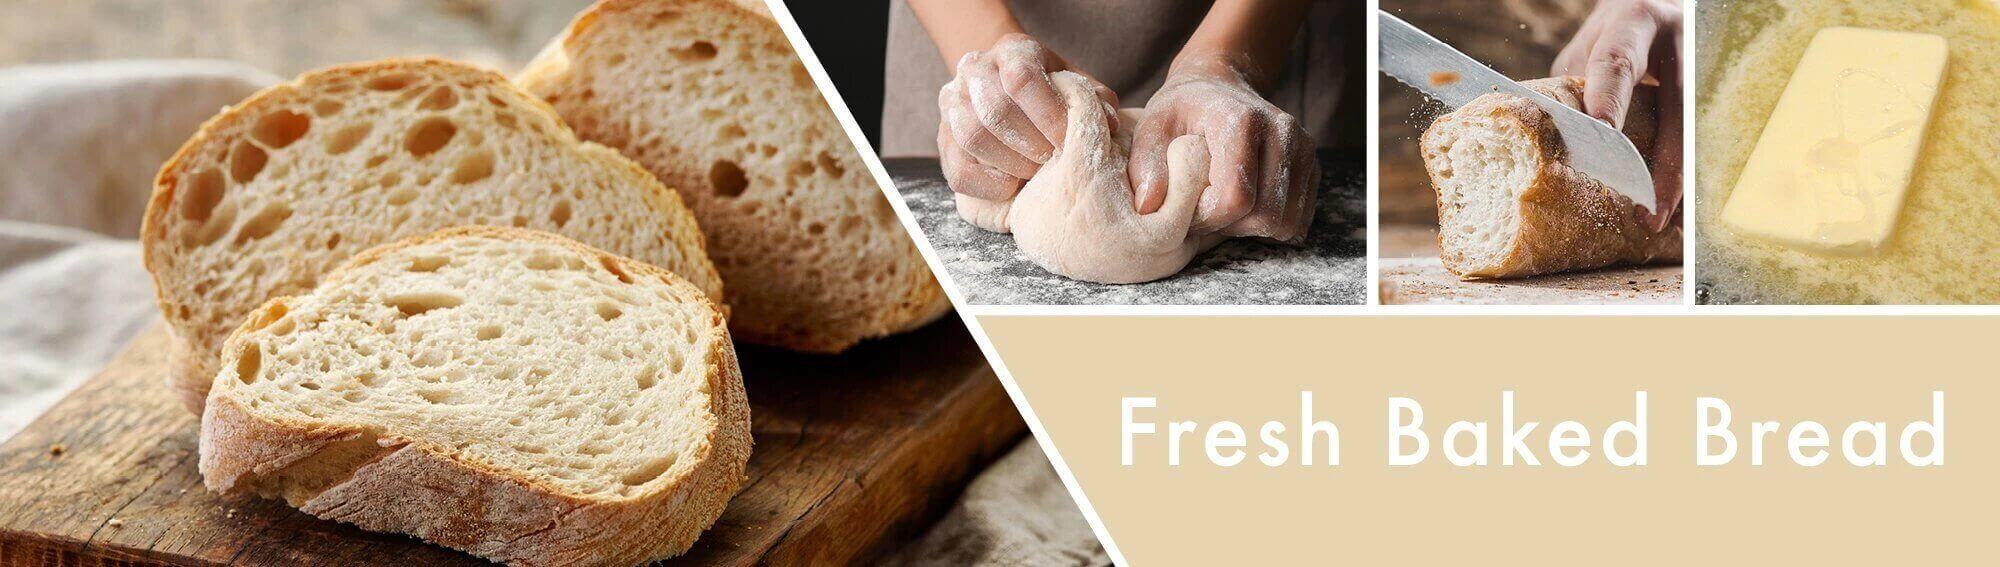 Fresh-Baked-Bread-Candle-FragranceGtiDVzqk6Wnp4